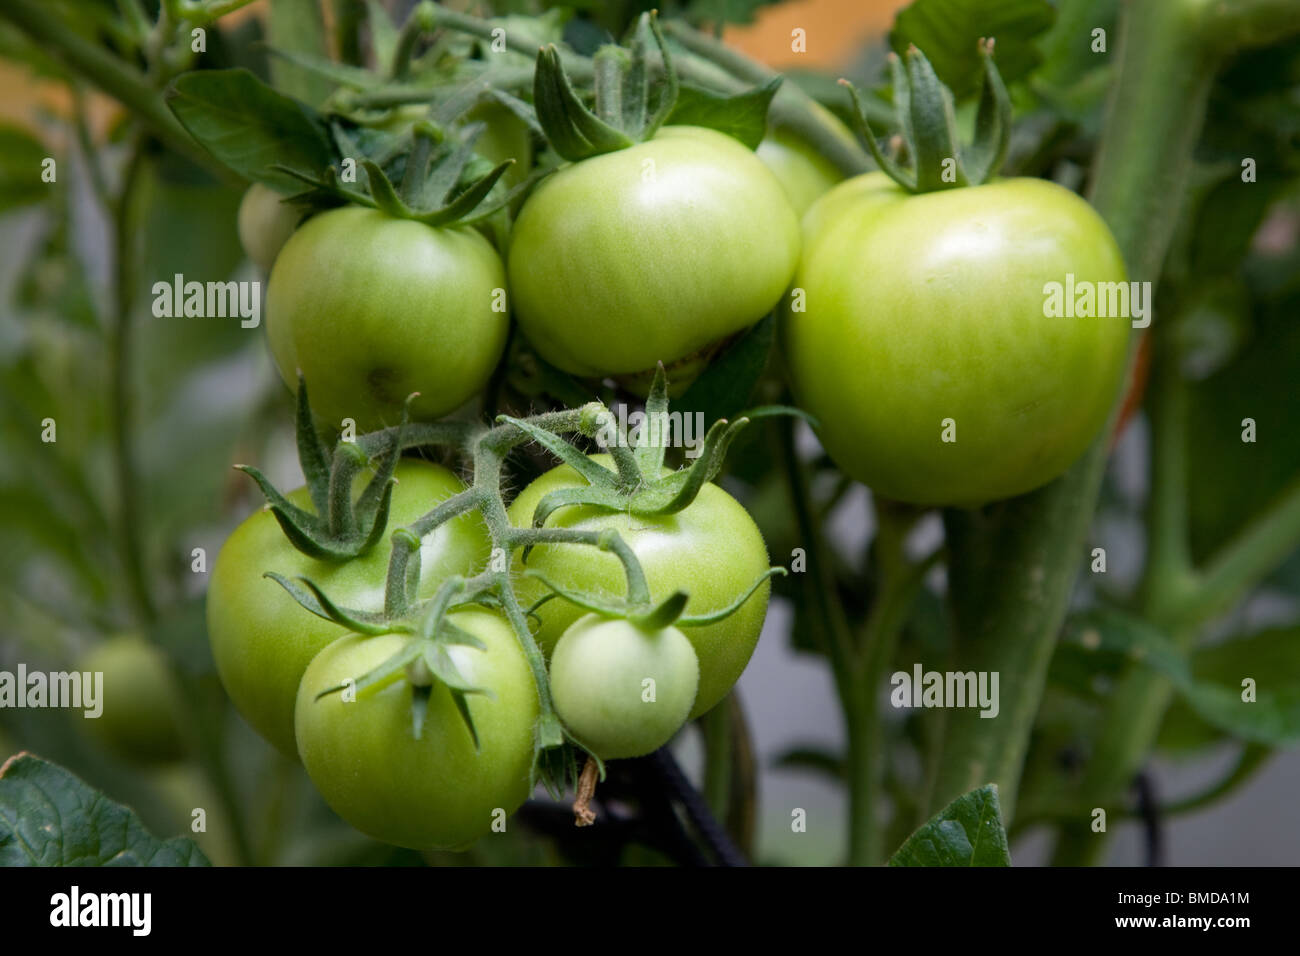 grüne Tomaten auf Reben - Solanum lycopersicum Stockfoto